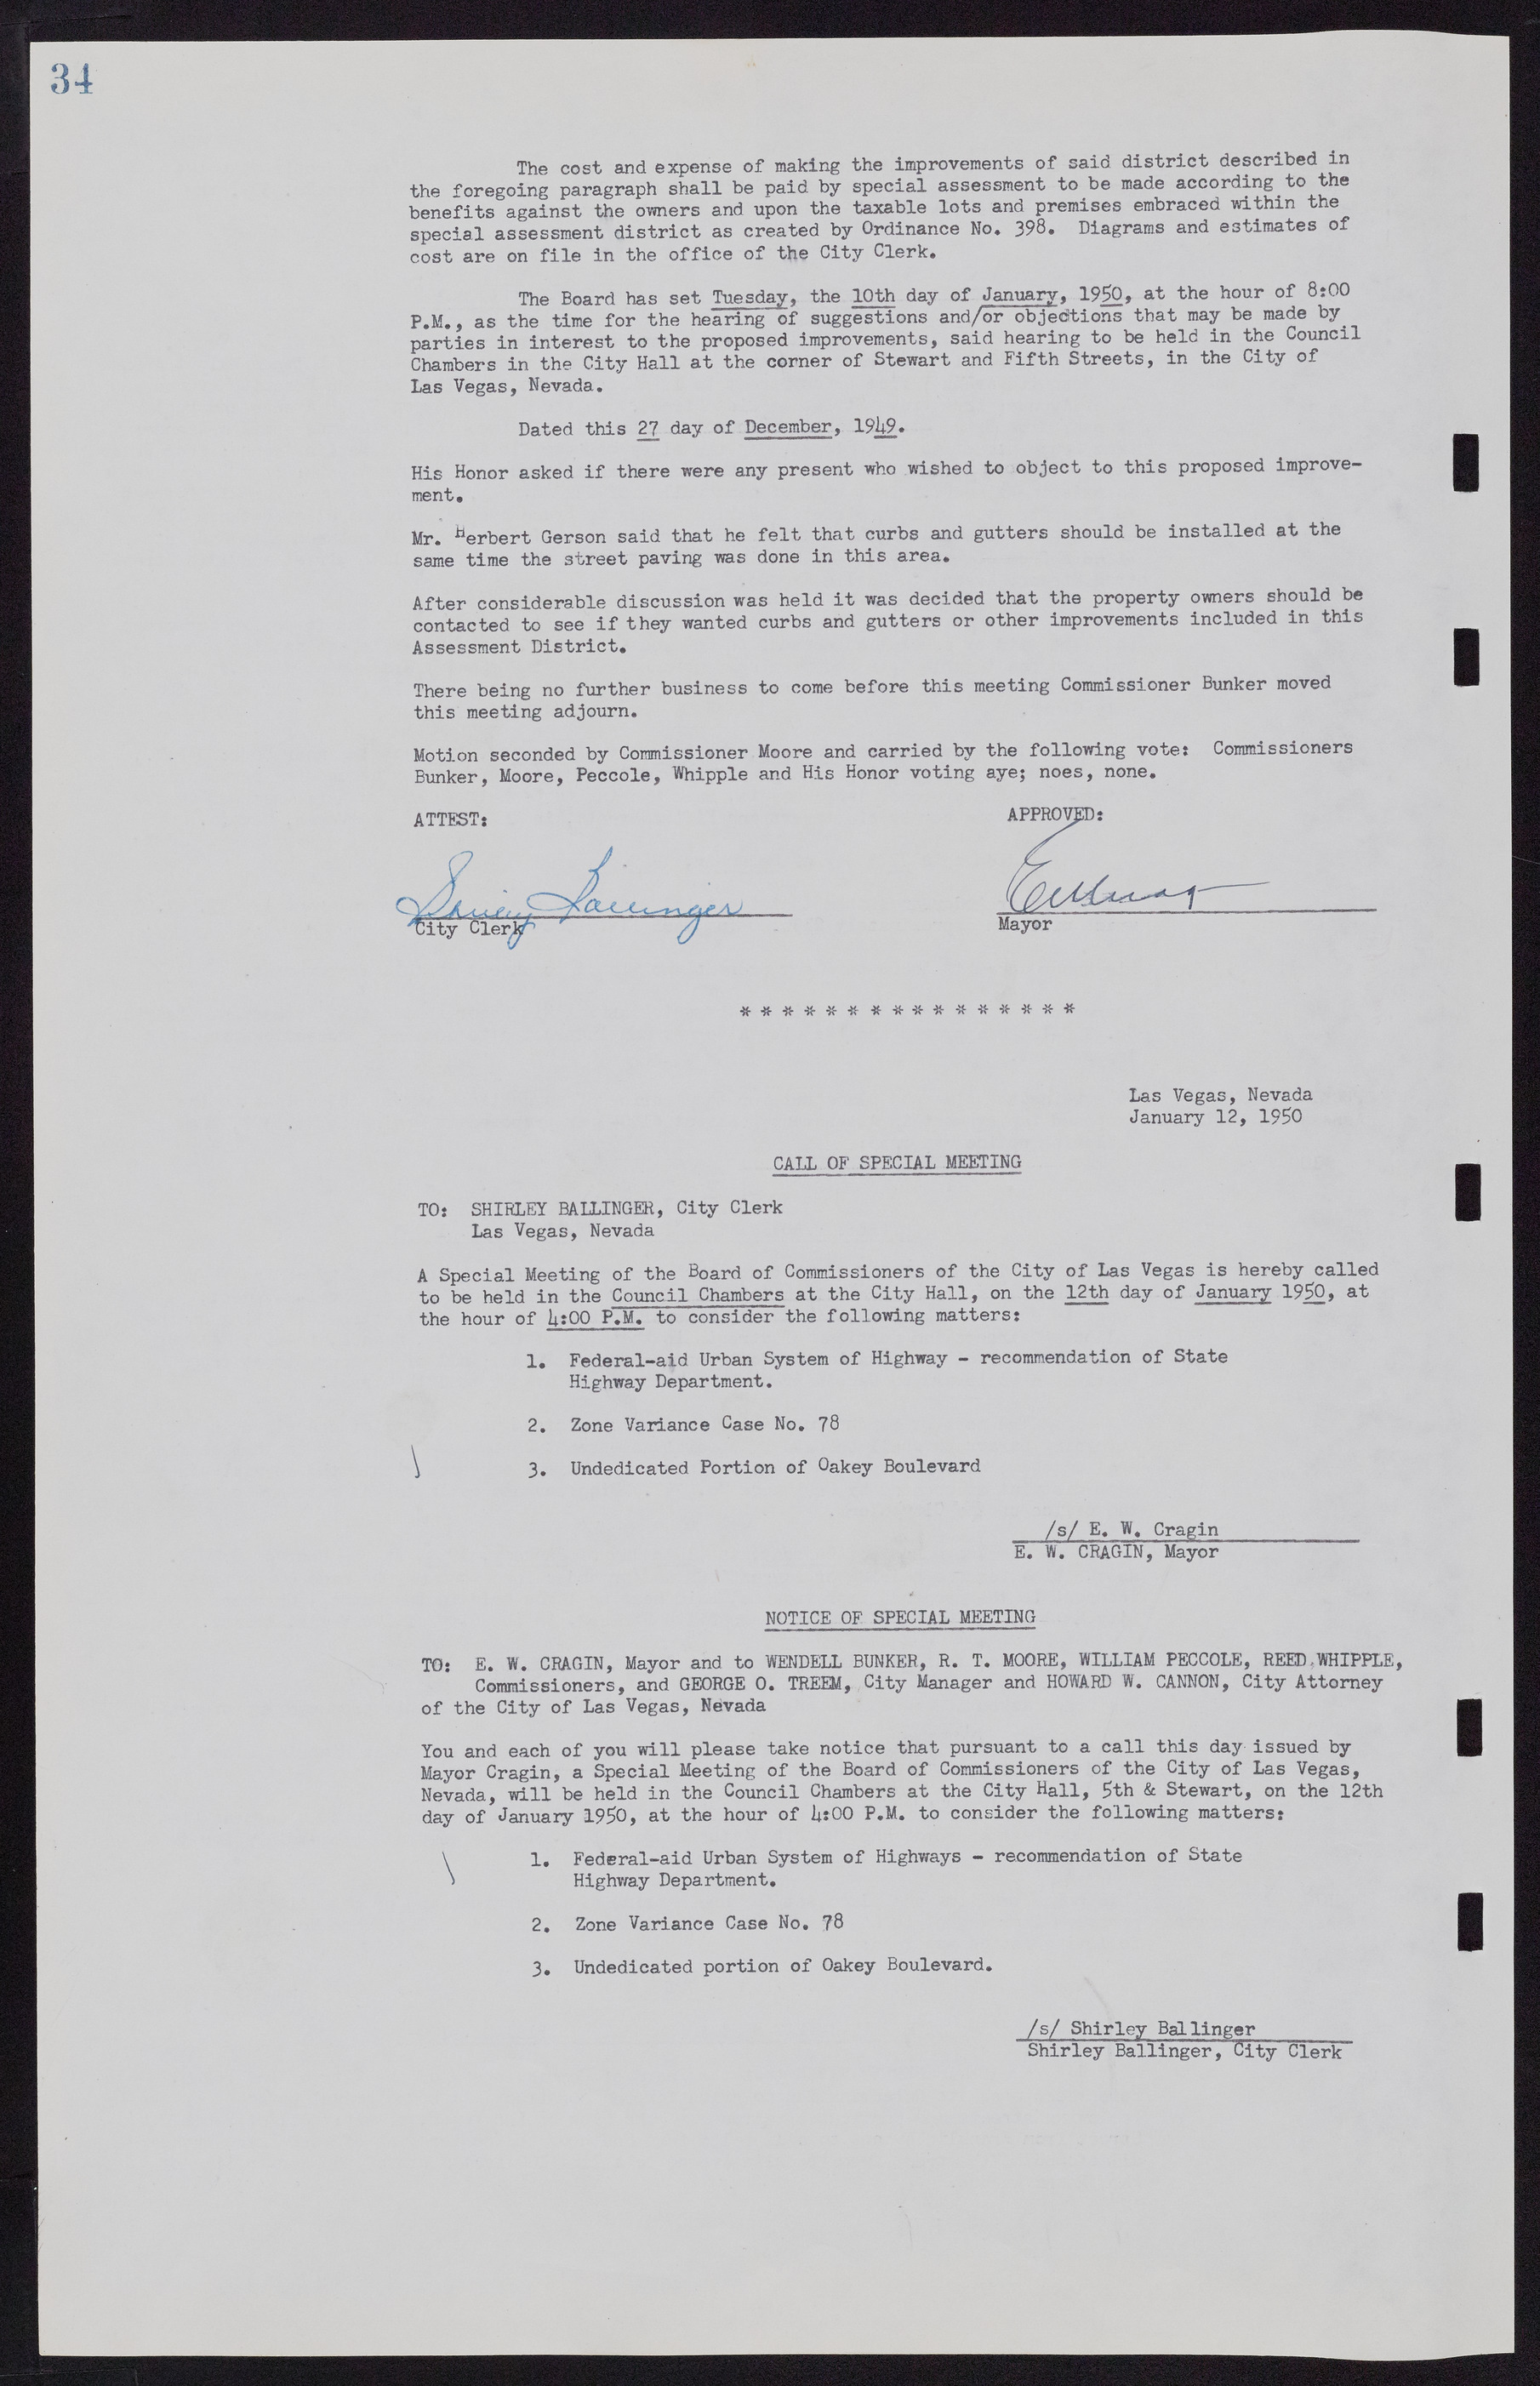 Las Vegas City Commission Minutes, November 7, 1949 to May 21, 1952, lvc000007-42